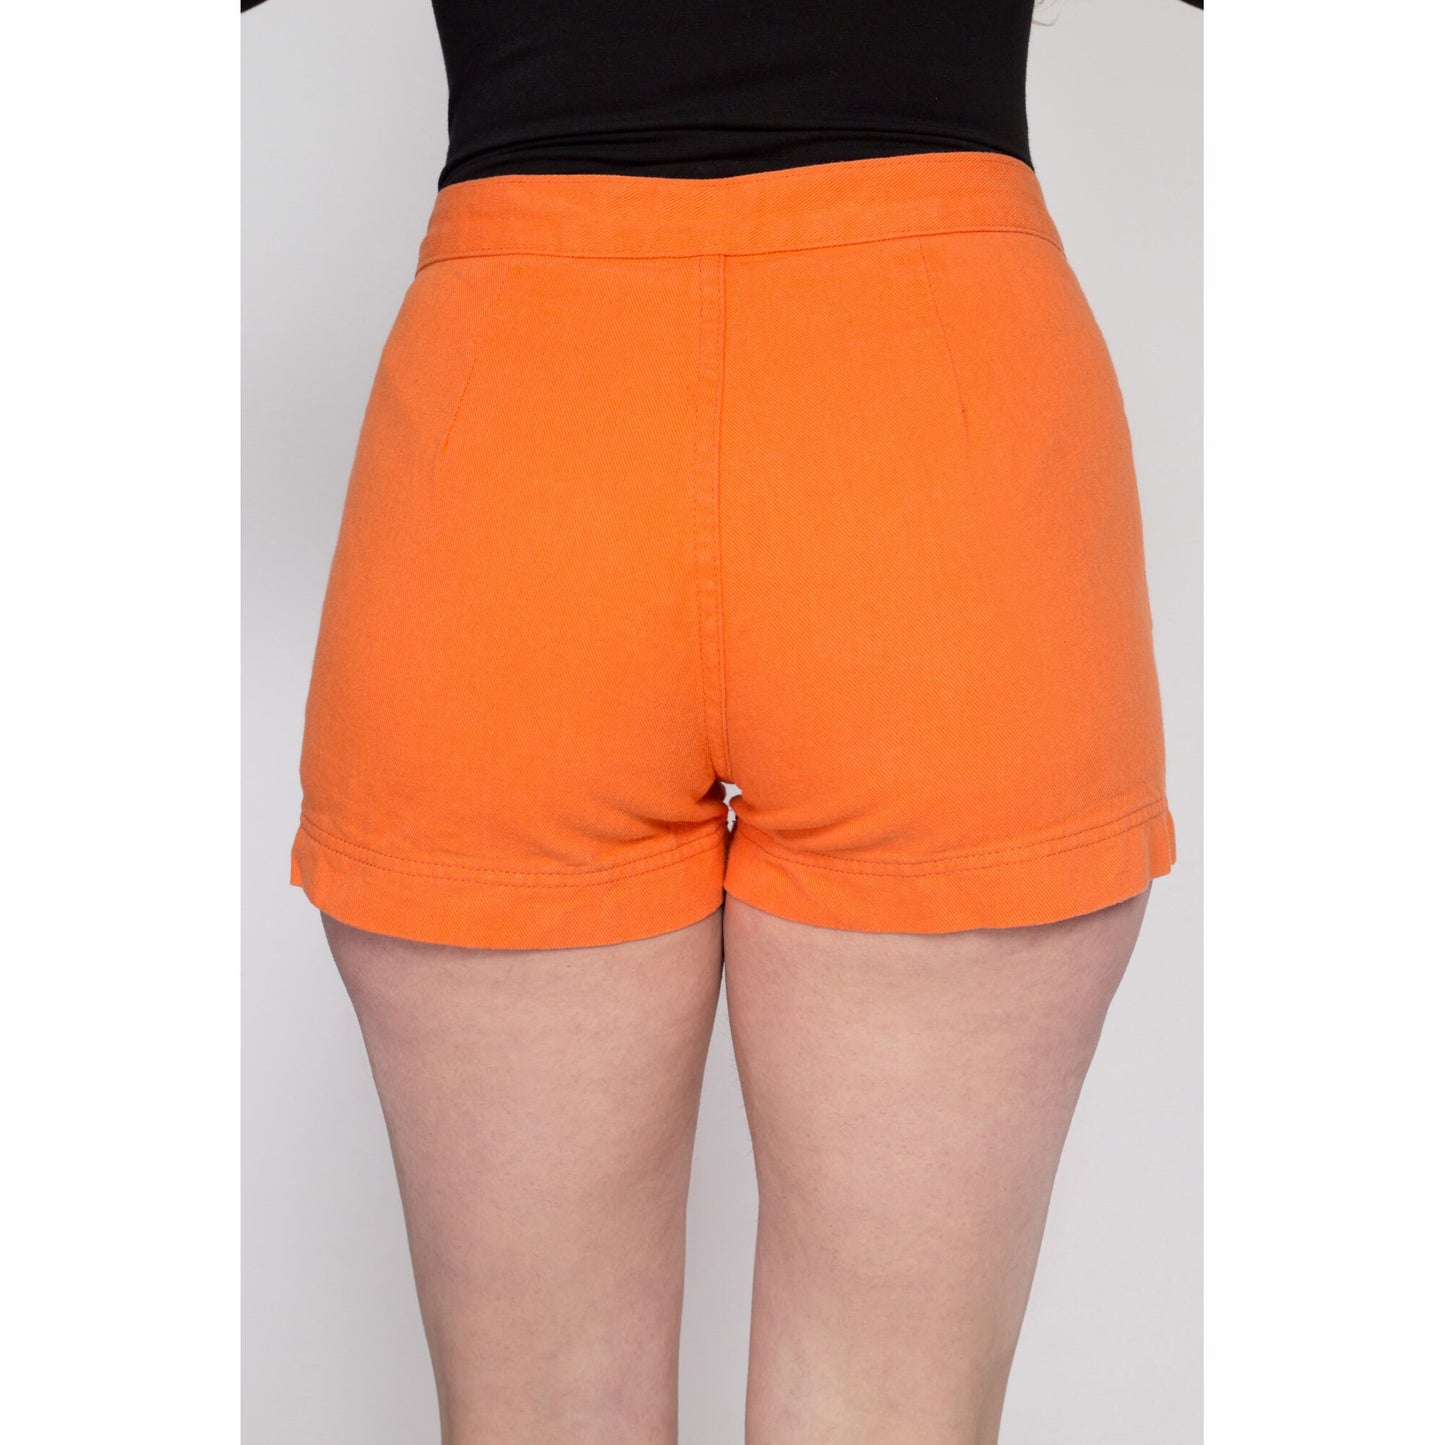 Medium 80s Orange Cheeky Jean Shorts | Vintage Be Bop Mid Rise Denim Booty Shorts